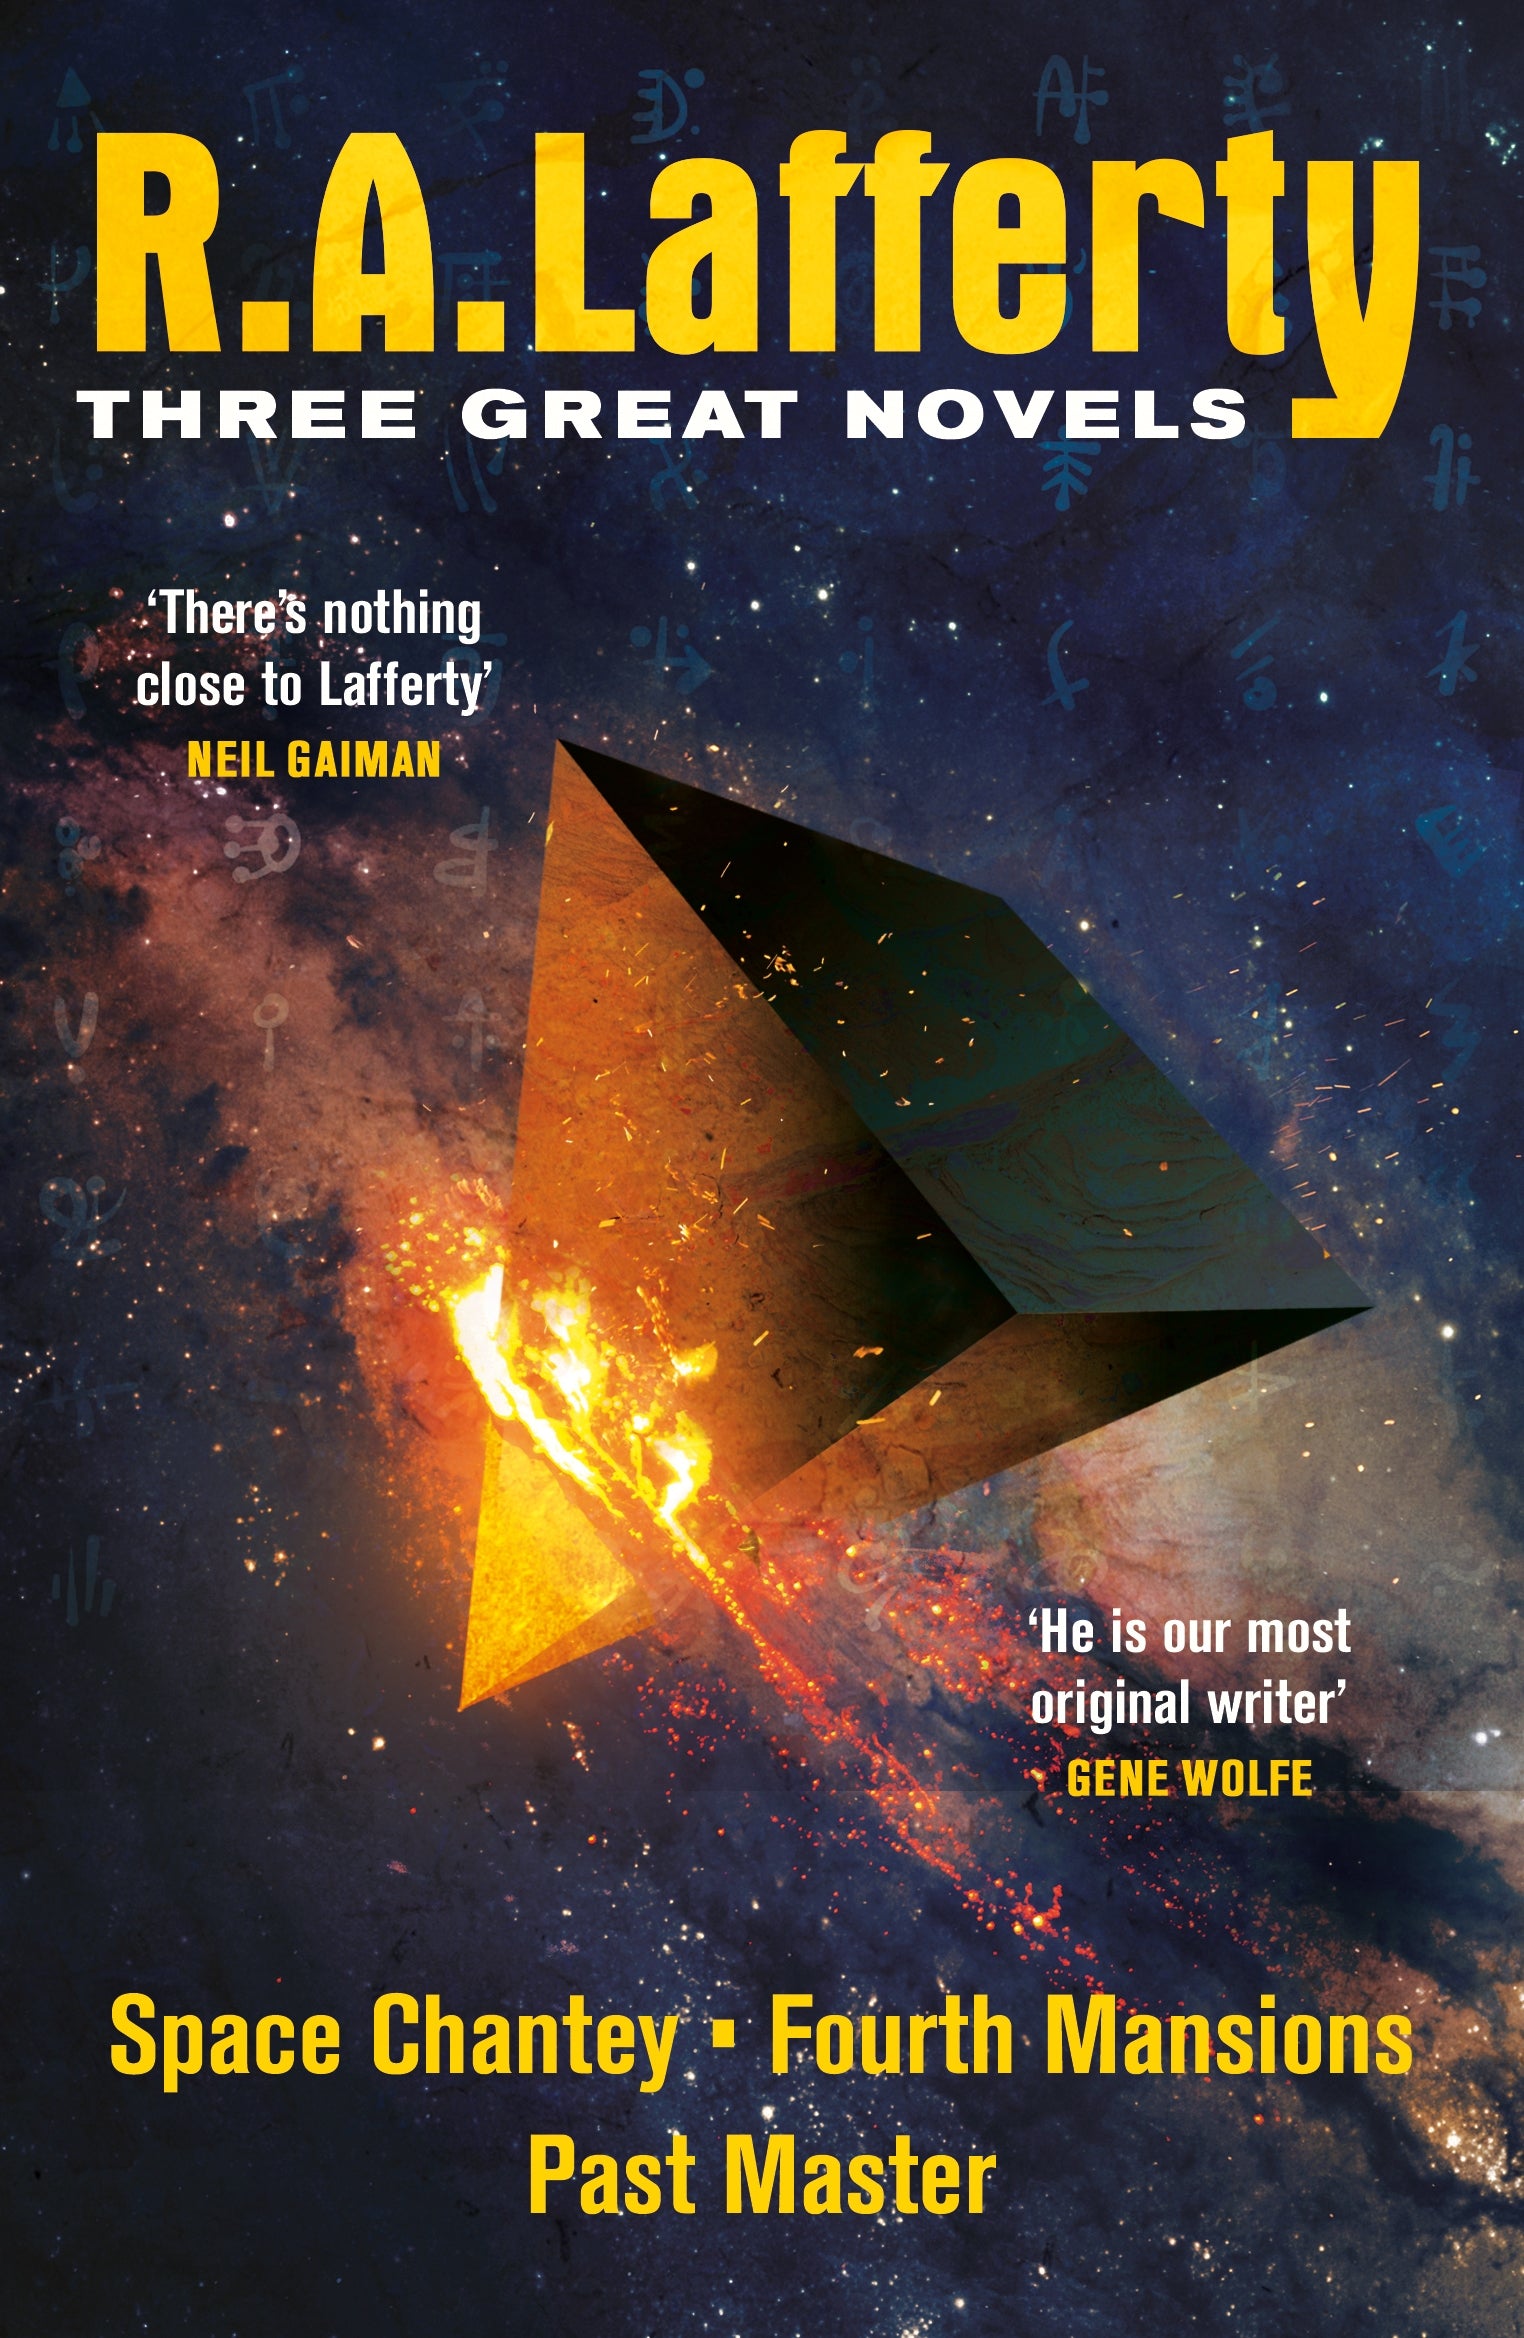 R. A. Lafferty: Three Great Novels by R. A. Lafferty